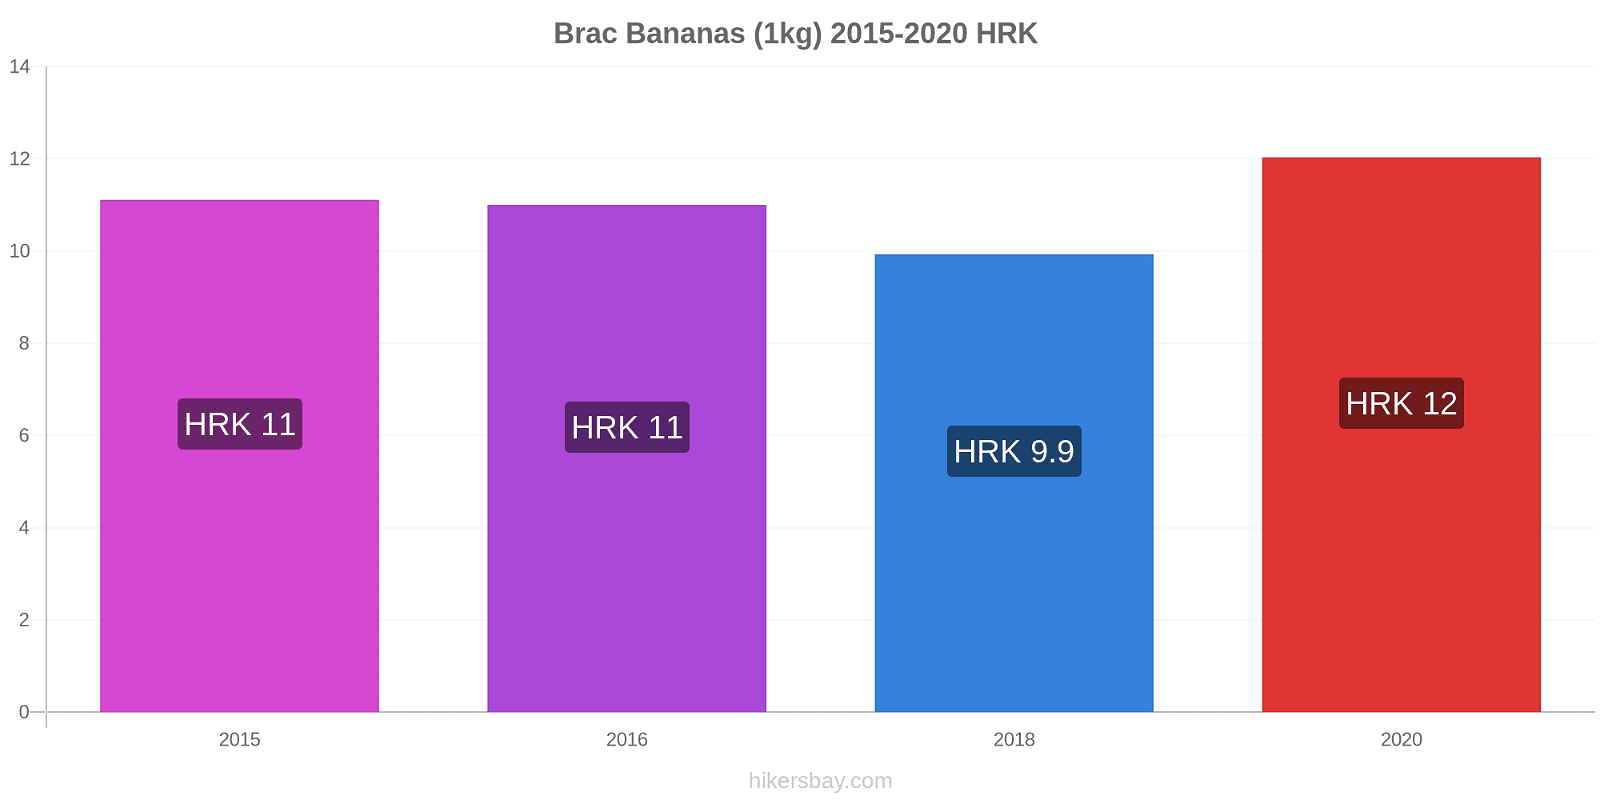 Brac price changes Bananas (1kg) hikersbay.com